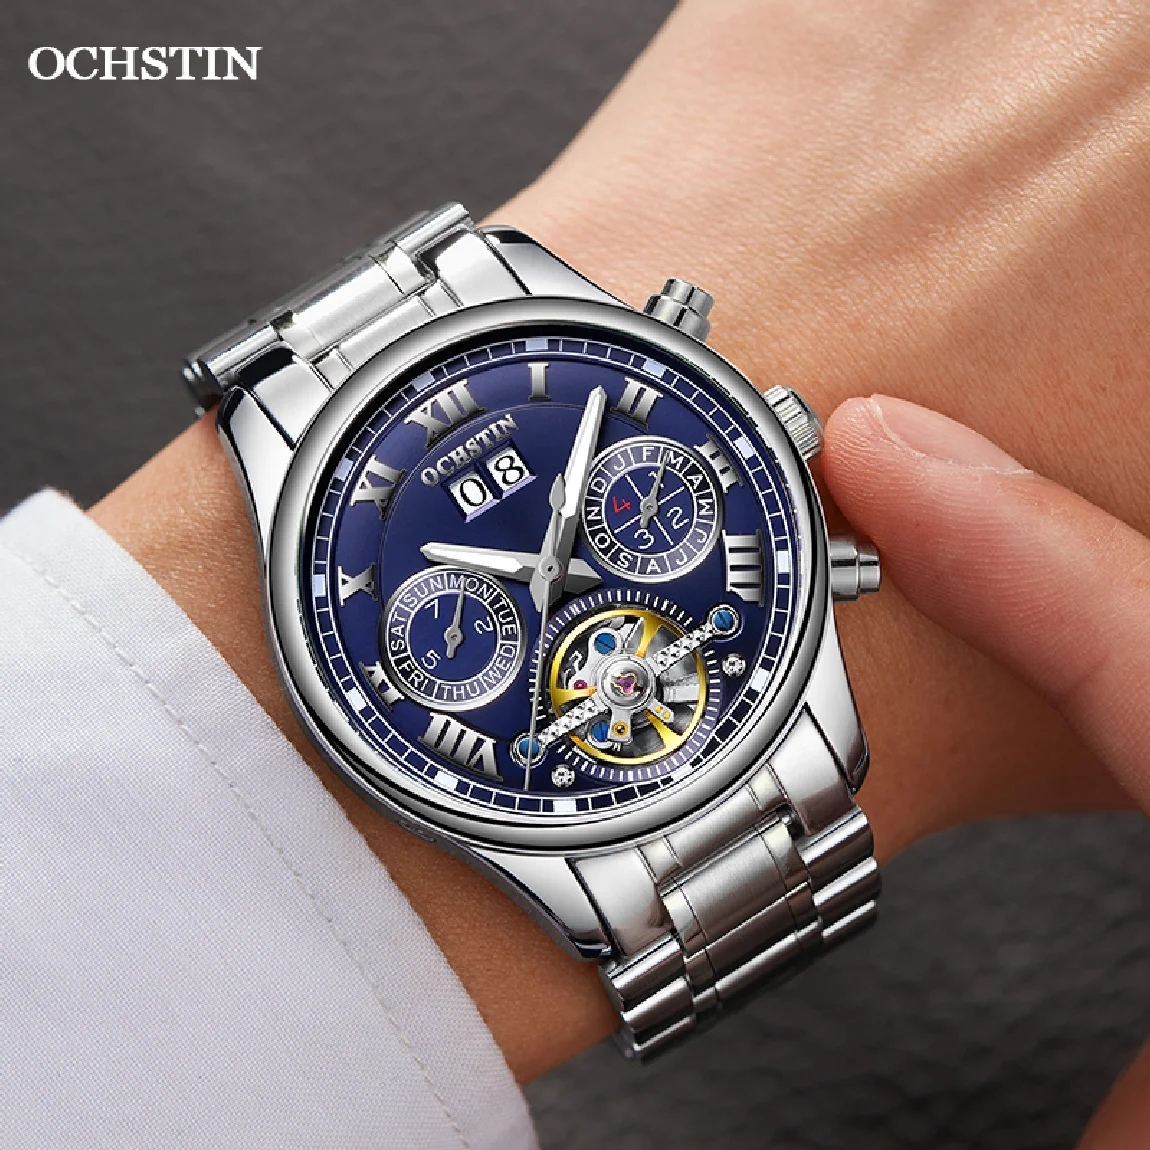 

OCHSTIN Original Automatic Mechanical Watch 2020 New Fashion Top Brand Bussiness Wristwatch Waterproof Steel Strap Shockproof